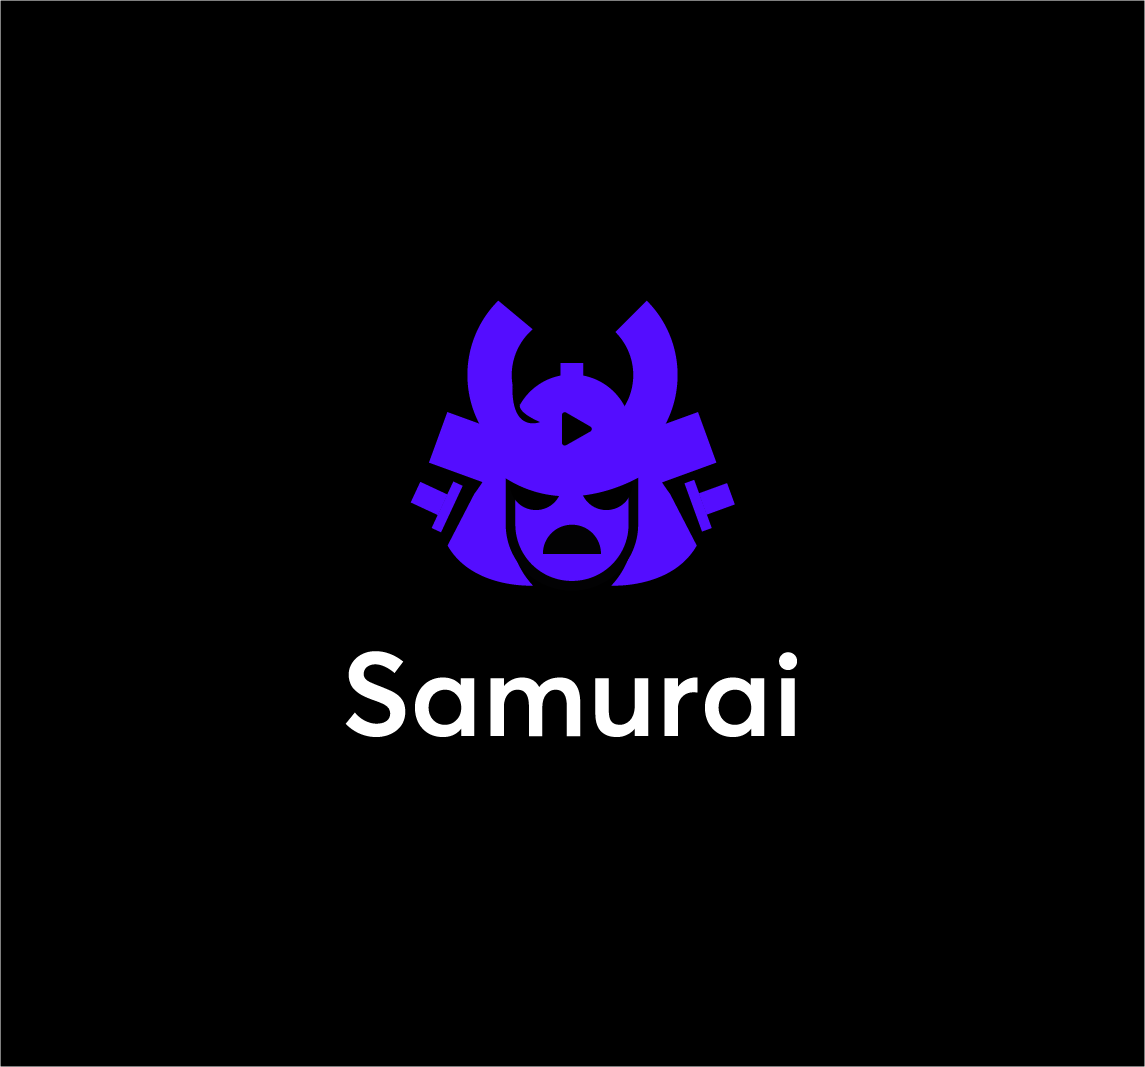 Samurai logo design by logo designer Joris van Bussel for your inspiration and for the worlds largest logo competition